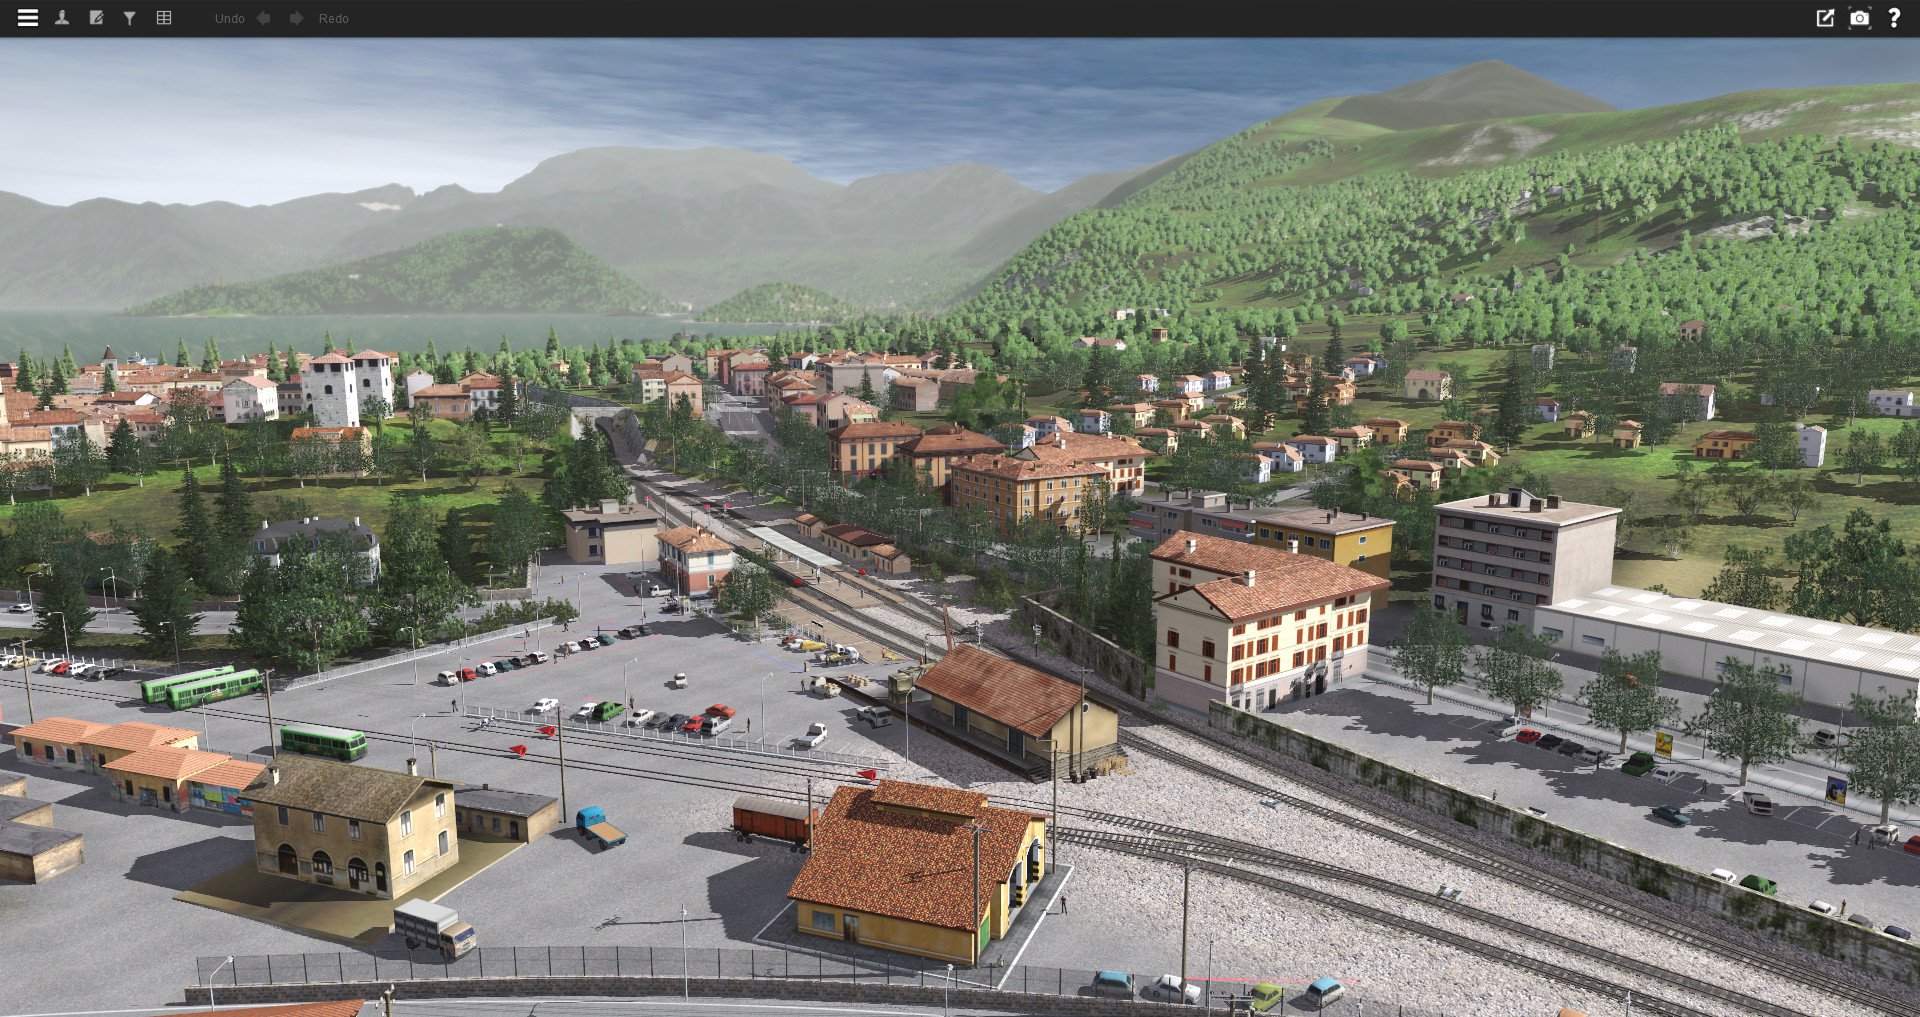 Trainz Railroad Simulator 2019 Free Download